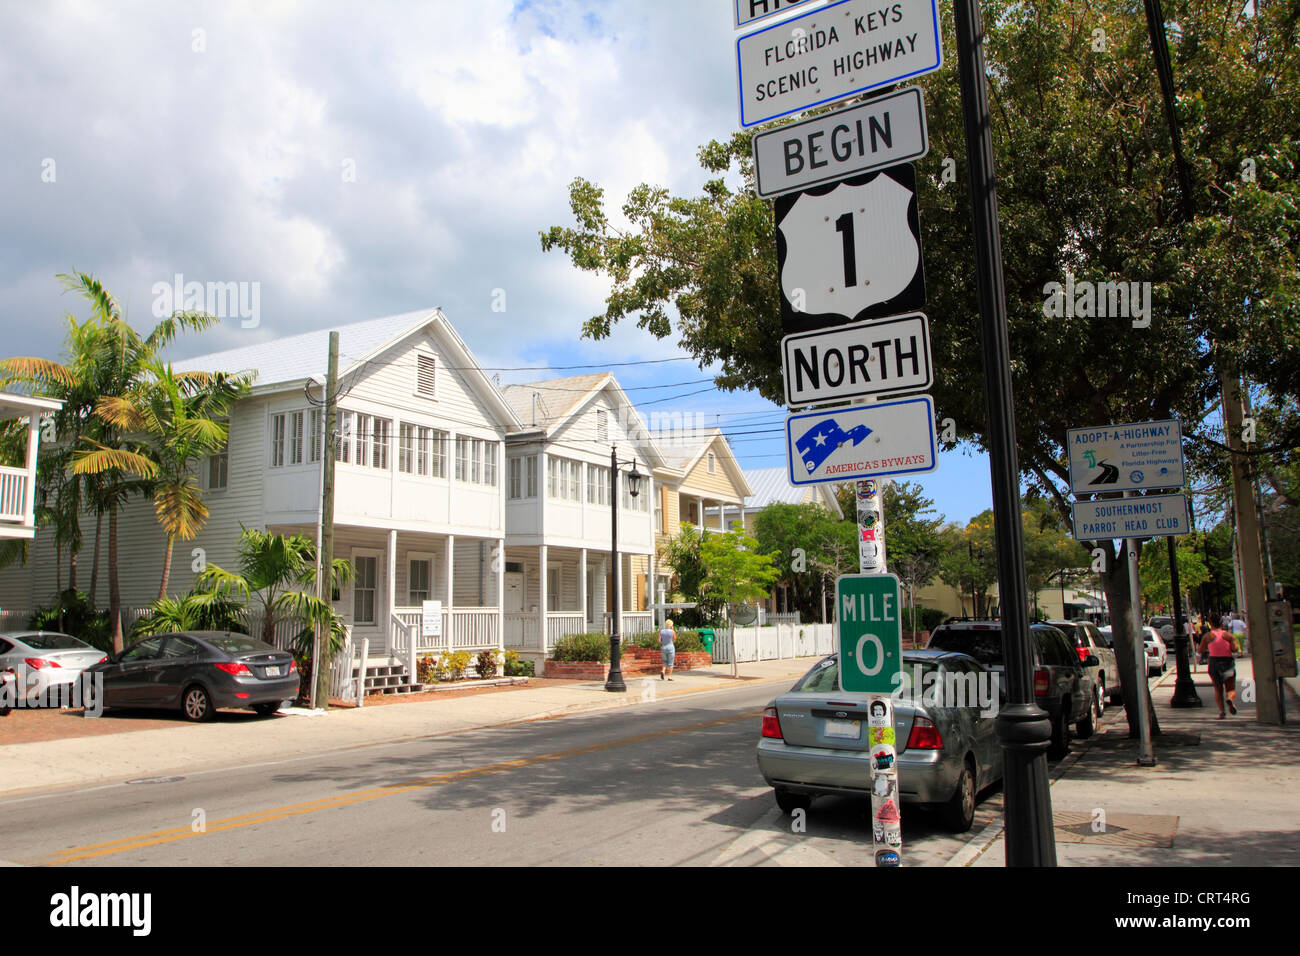 Meile Null oder Beginn des U.S. Highway Route 1 in Key West, Florida, USA Stockfoto